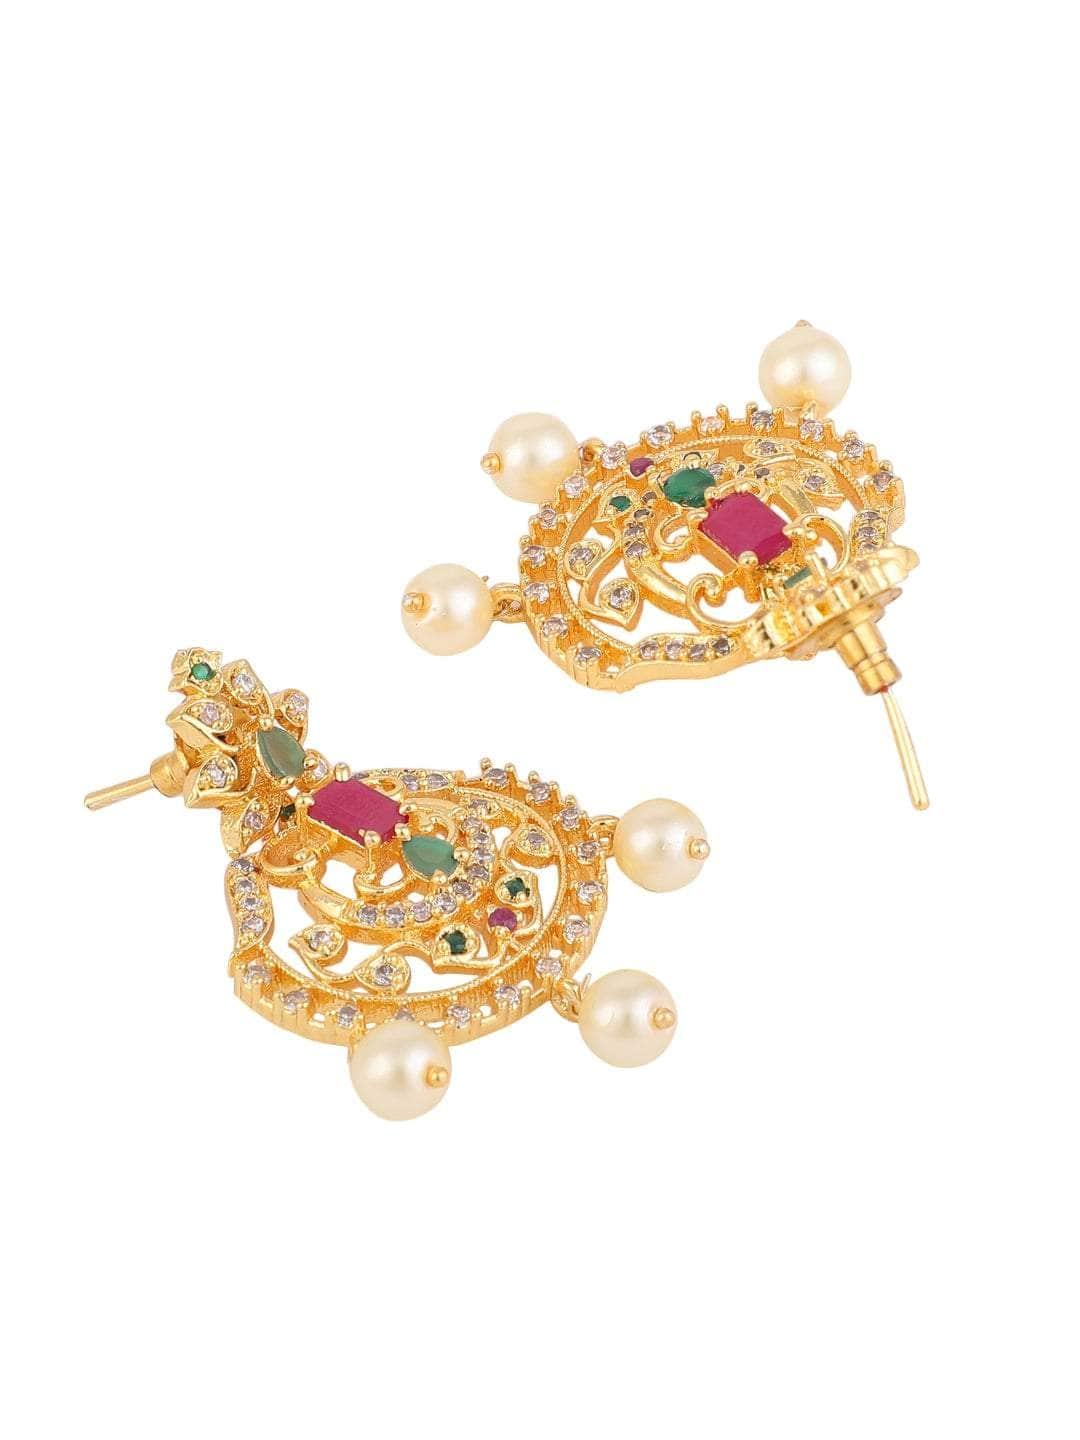 Ishhaara Stylish AD necklace set with drop earrings